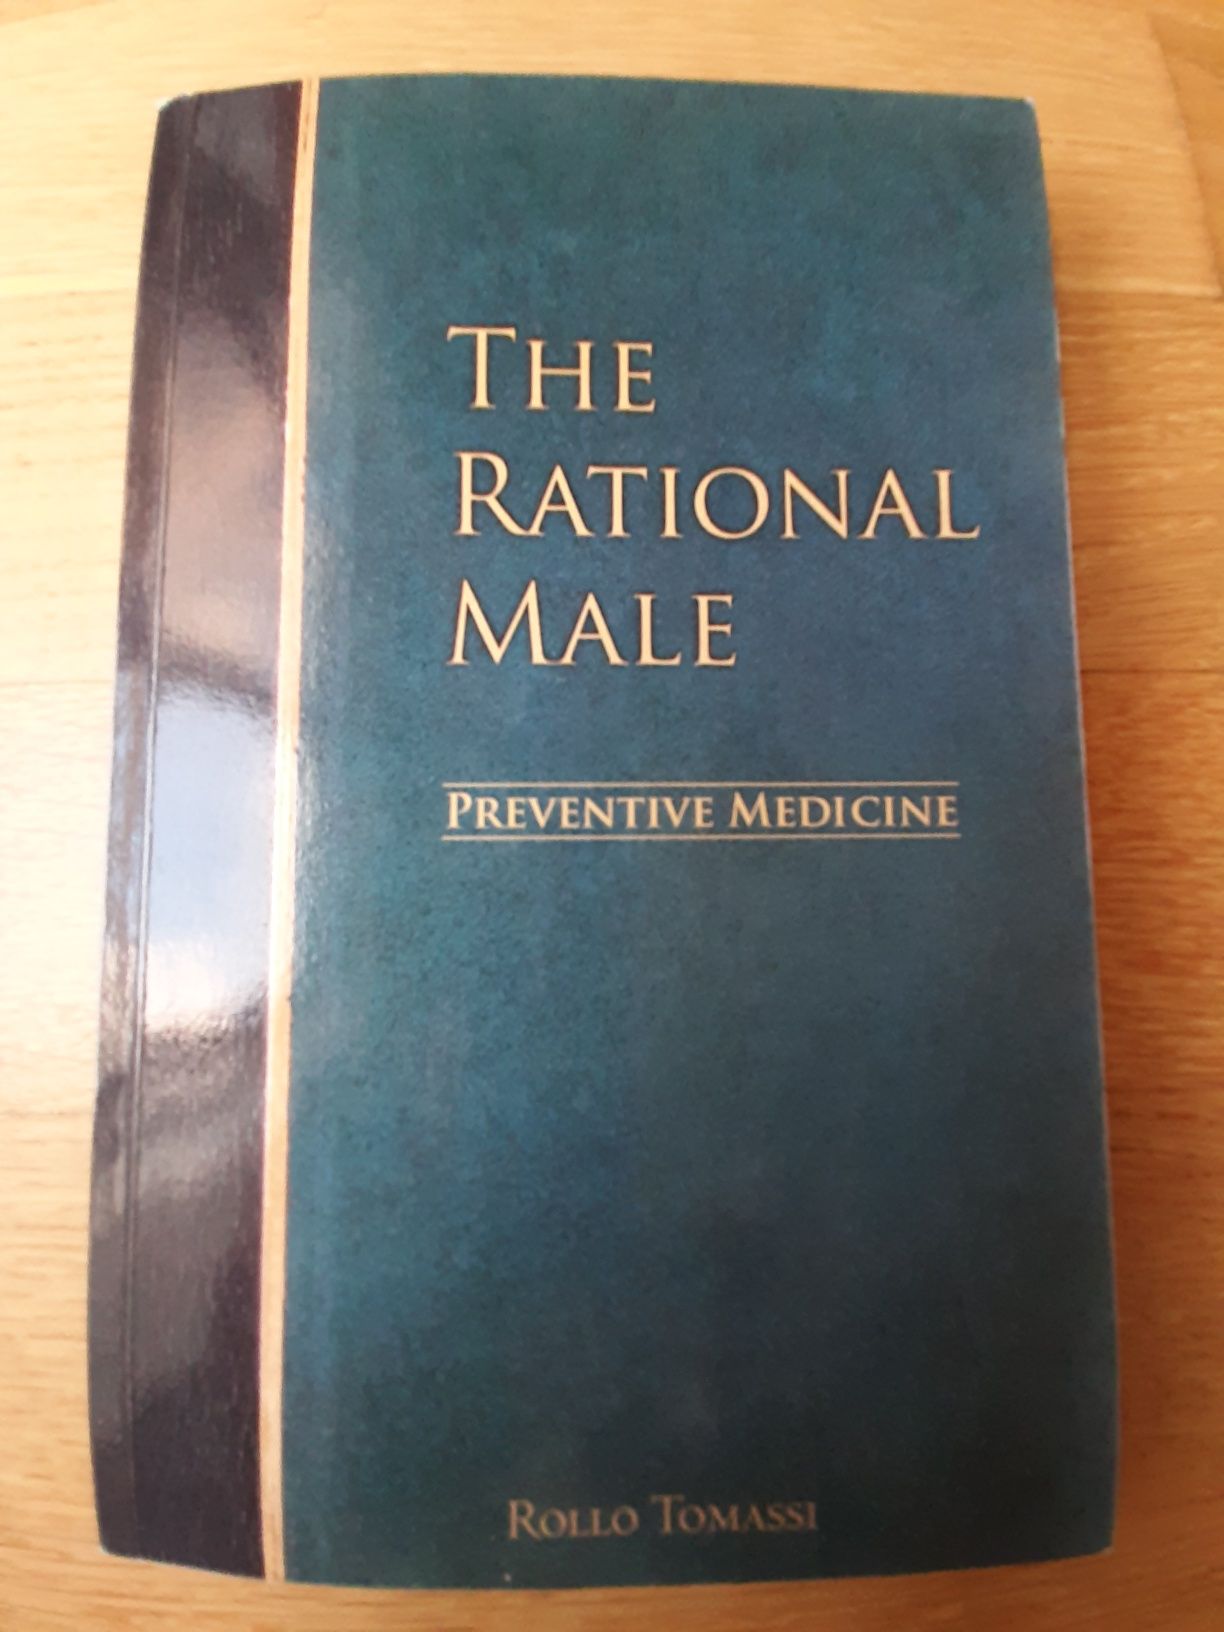 The rational male preventive medicine (BSZSP2)